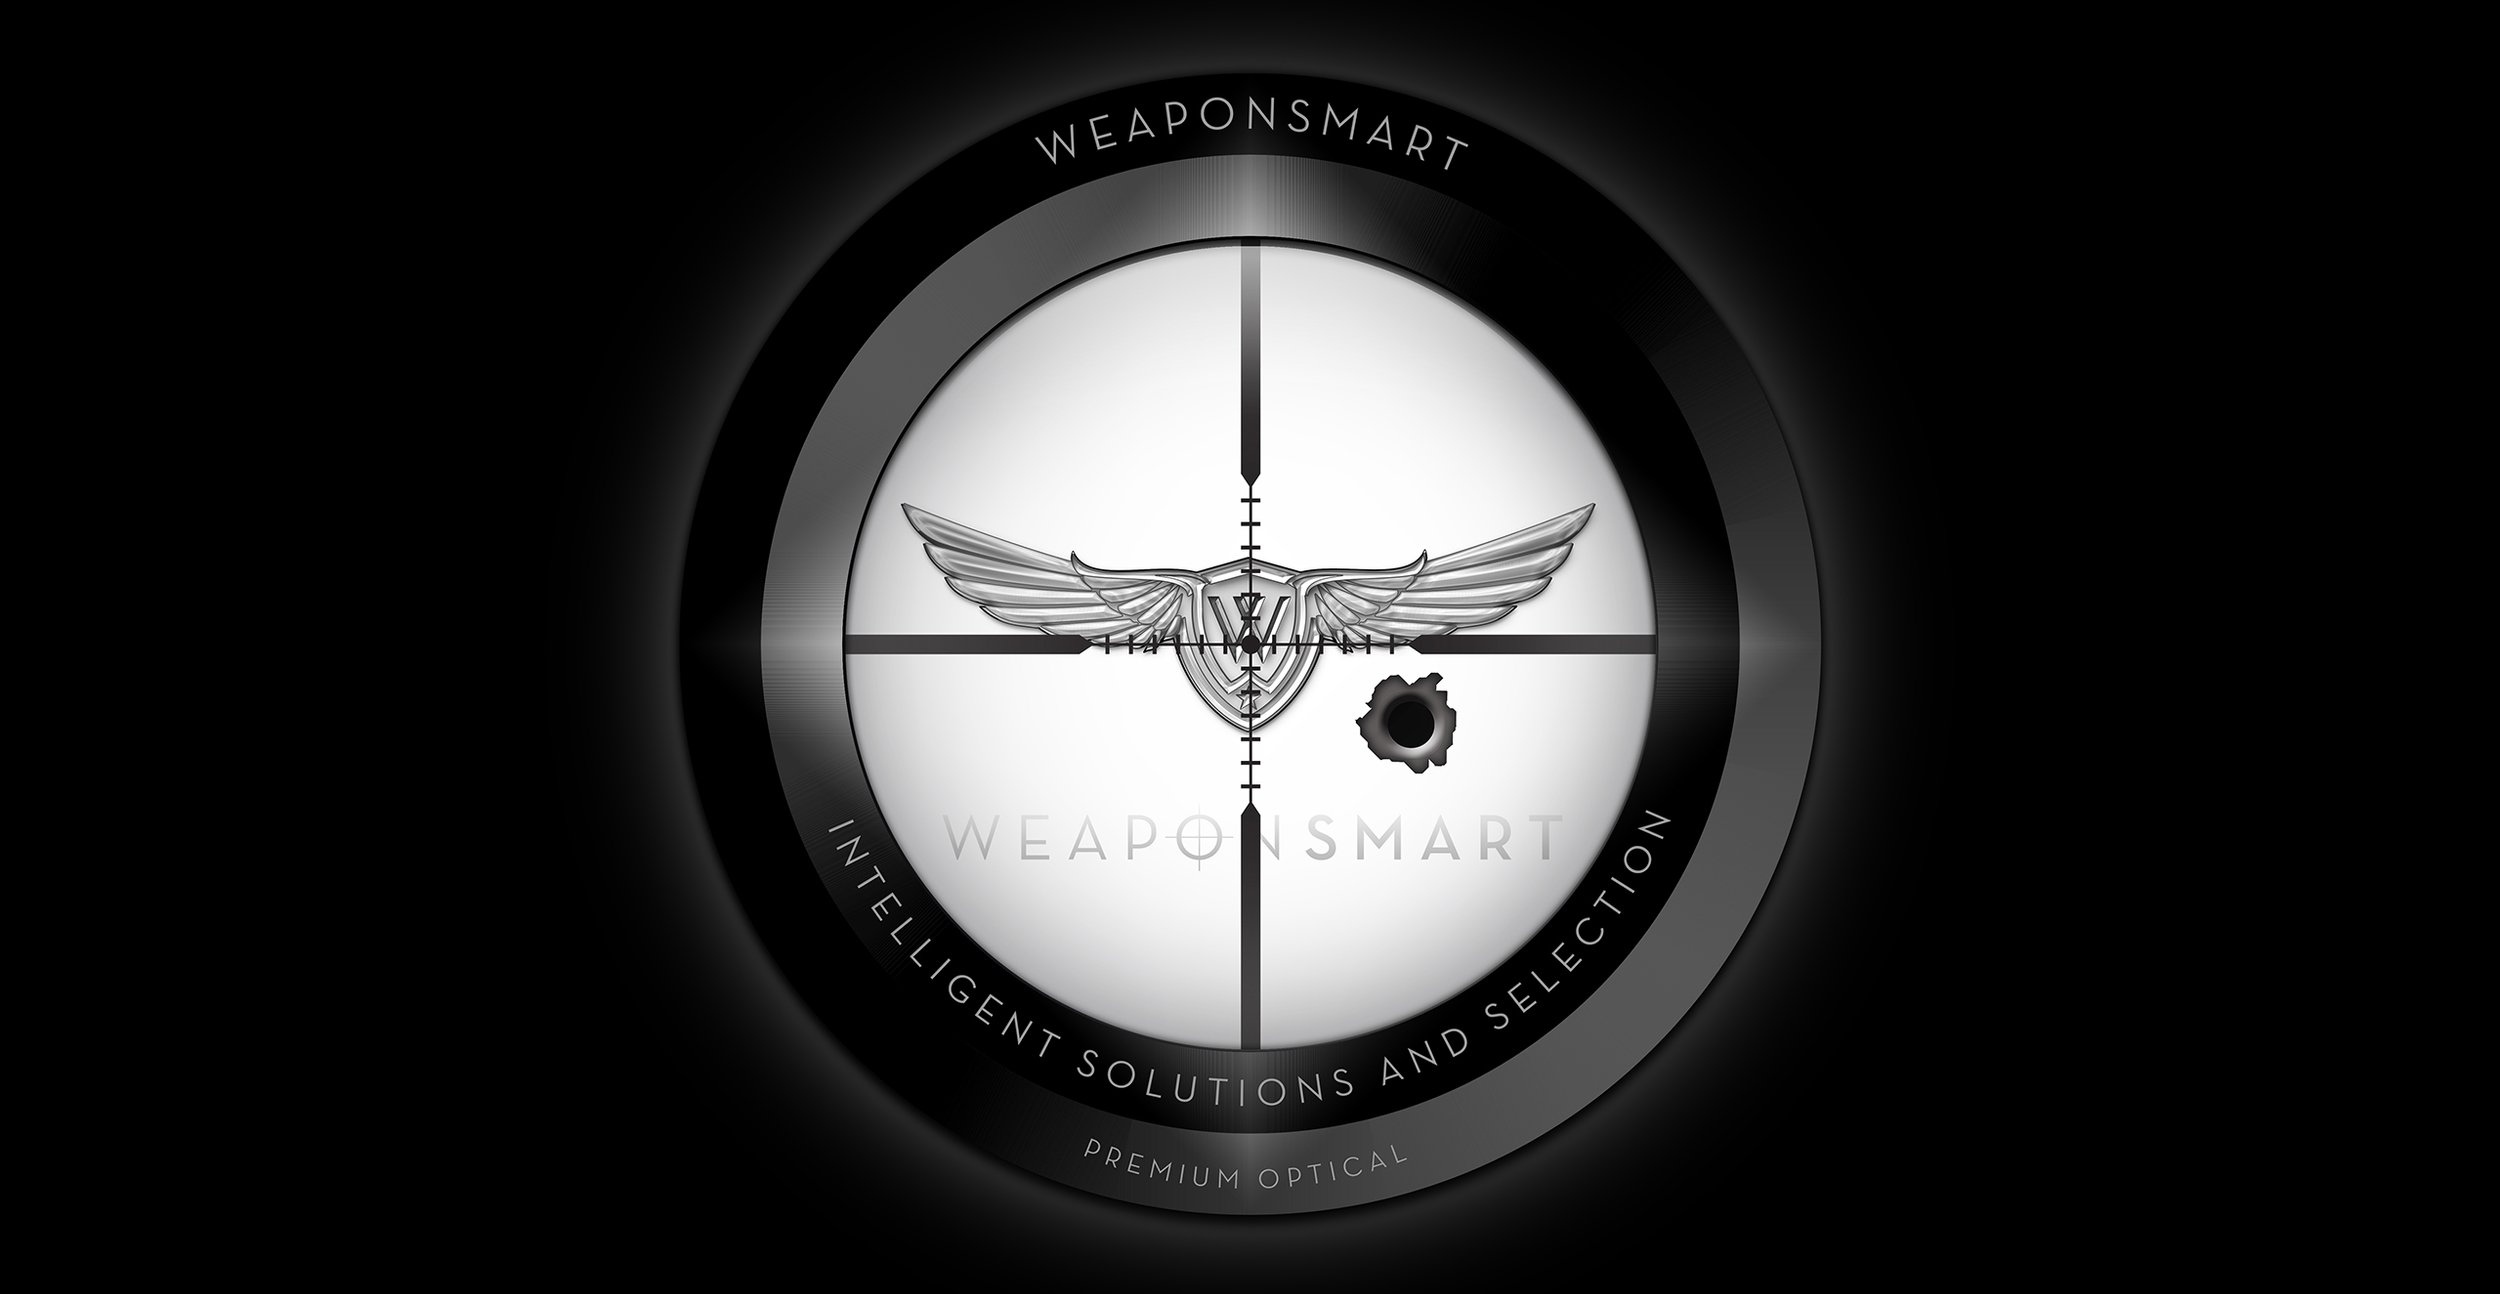 Weaponsmart Landing Page by Brand G Creative rev 19 FEB 2023 copy.jpg